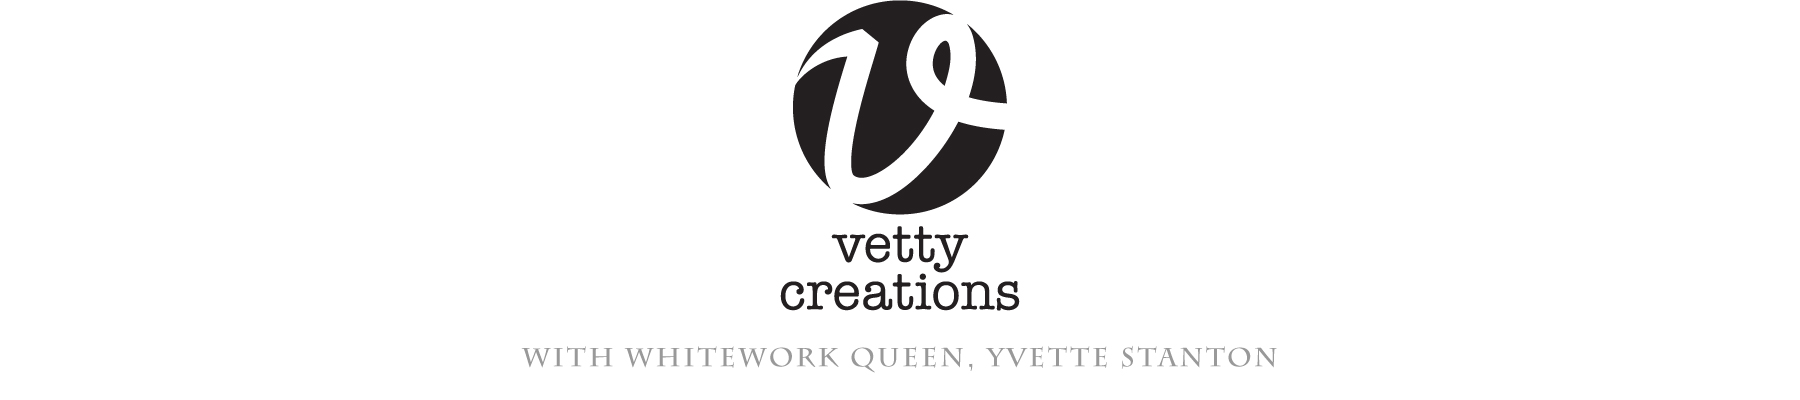 Vetty Creations header